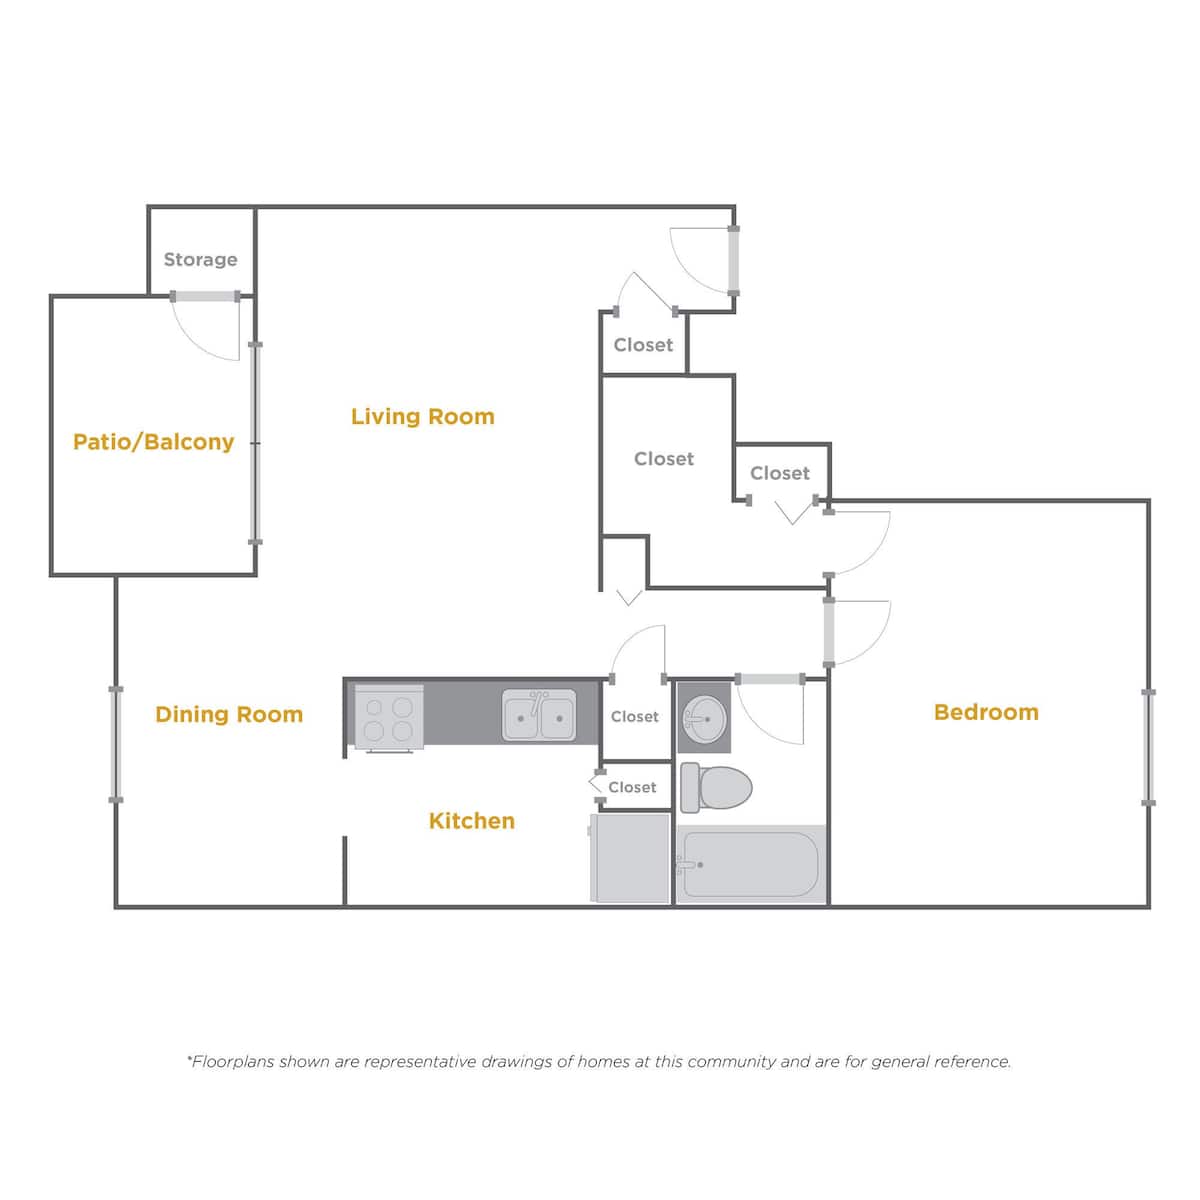 Floorplan diagram for a4, showing 1 bedroom